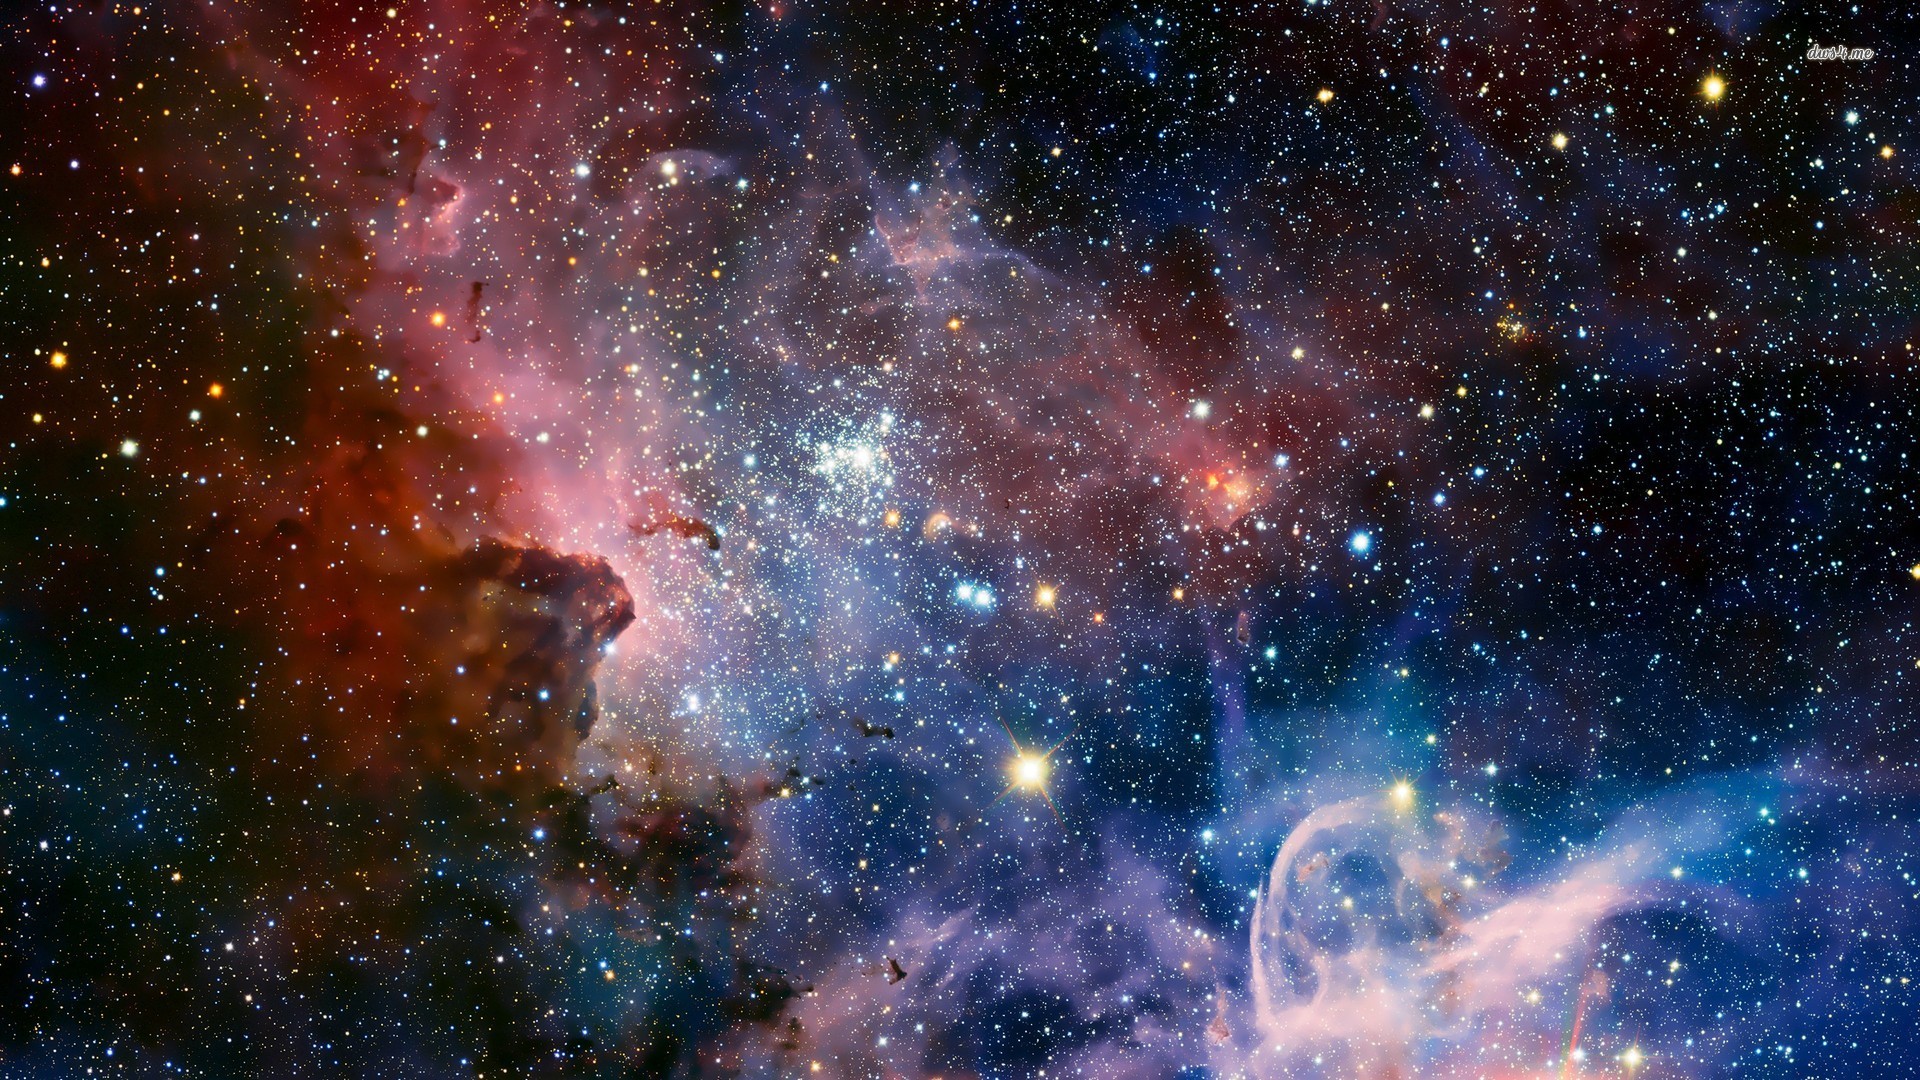 Http Cdn Paper4pc Com Images Carina Nebula Wallpaper 2 Jpg Spaceboard Pinterest Wallpaper And Sci Fi 1920x1080